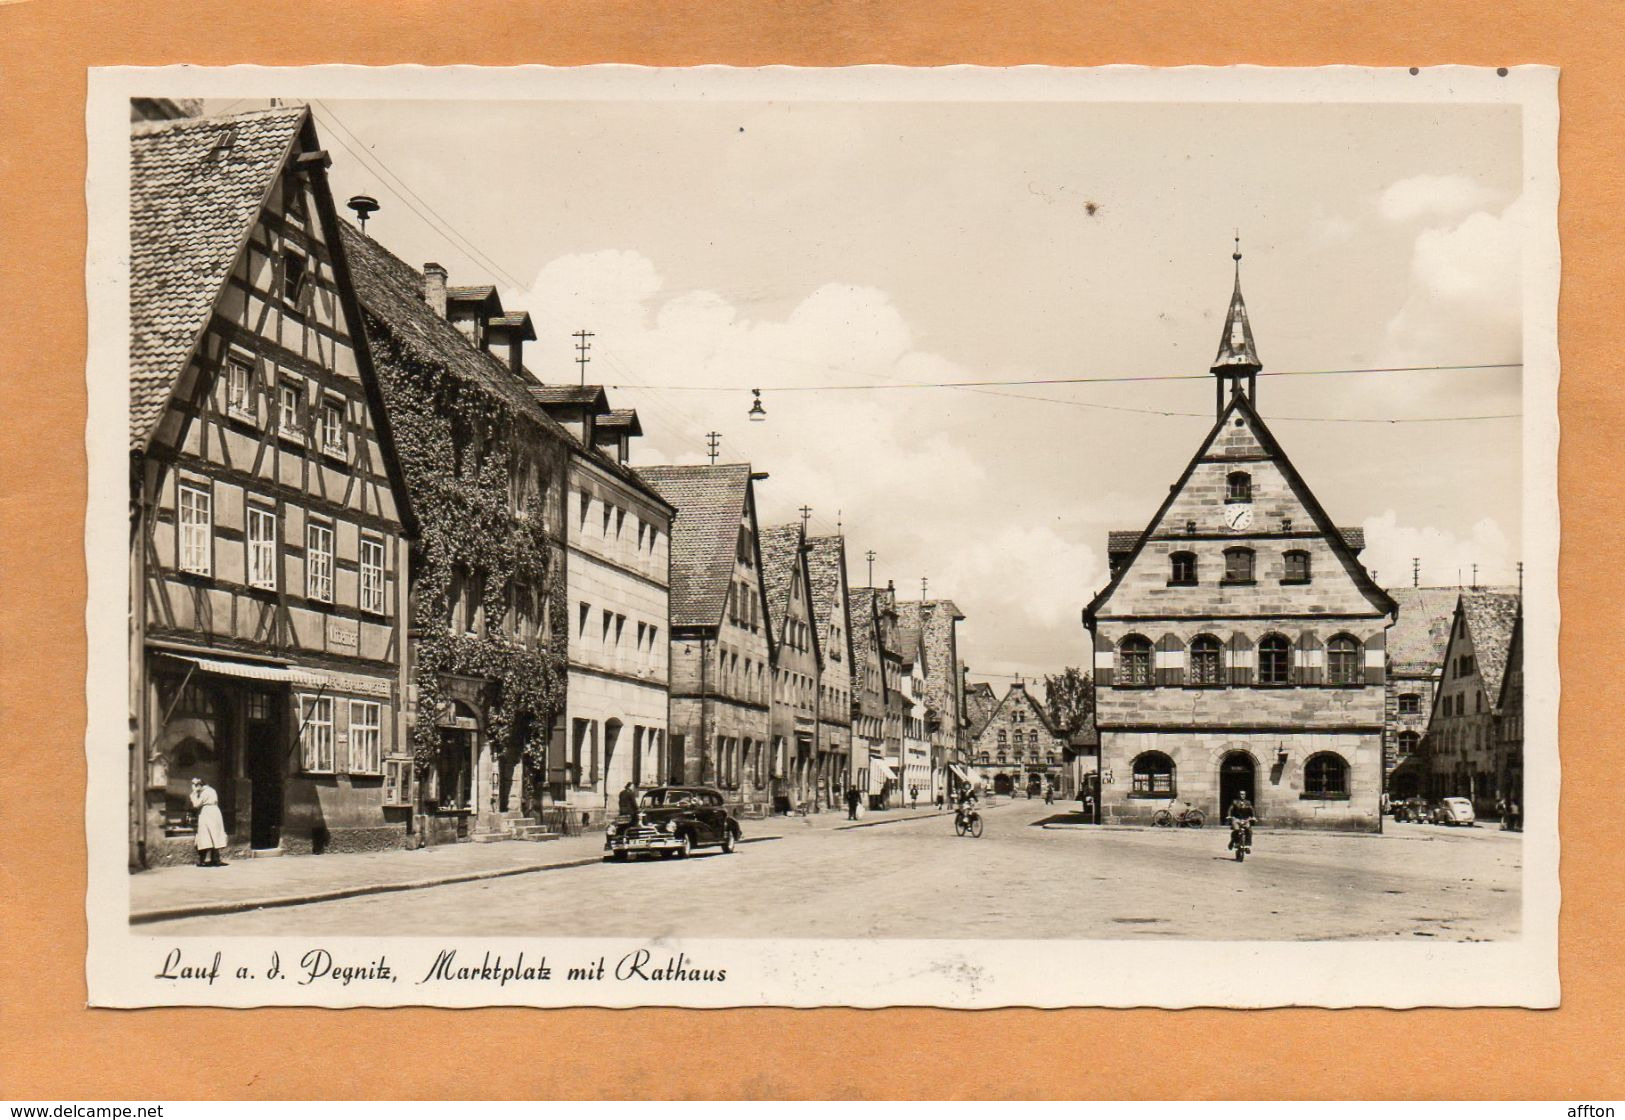 Lauf A.d. Pegnitz Germany 1930 Postcard - Lauf